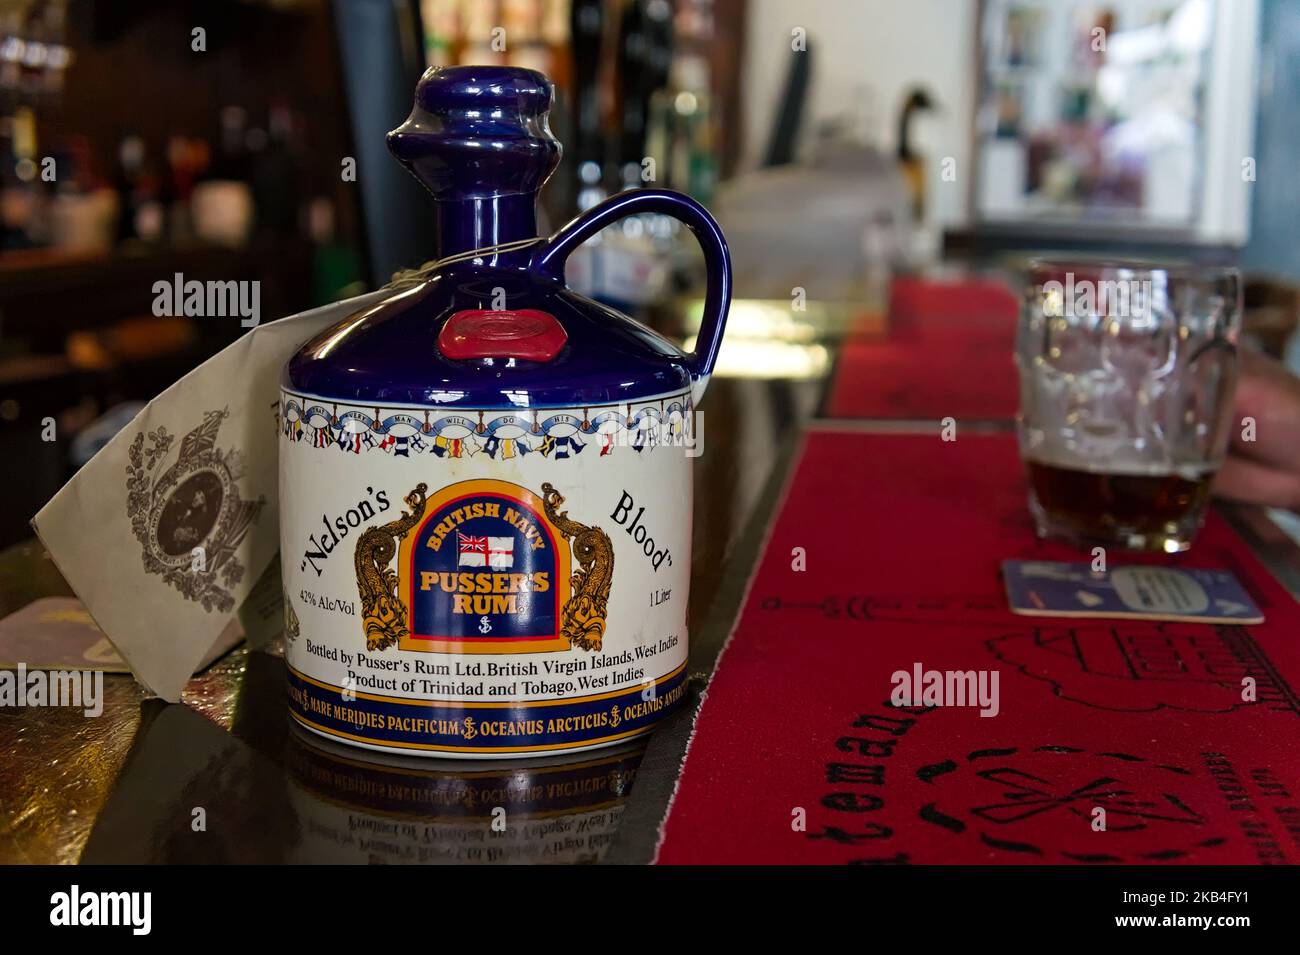 British Pusser's Rum jug at the bar in the pub. Stock Photo